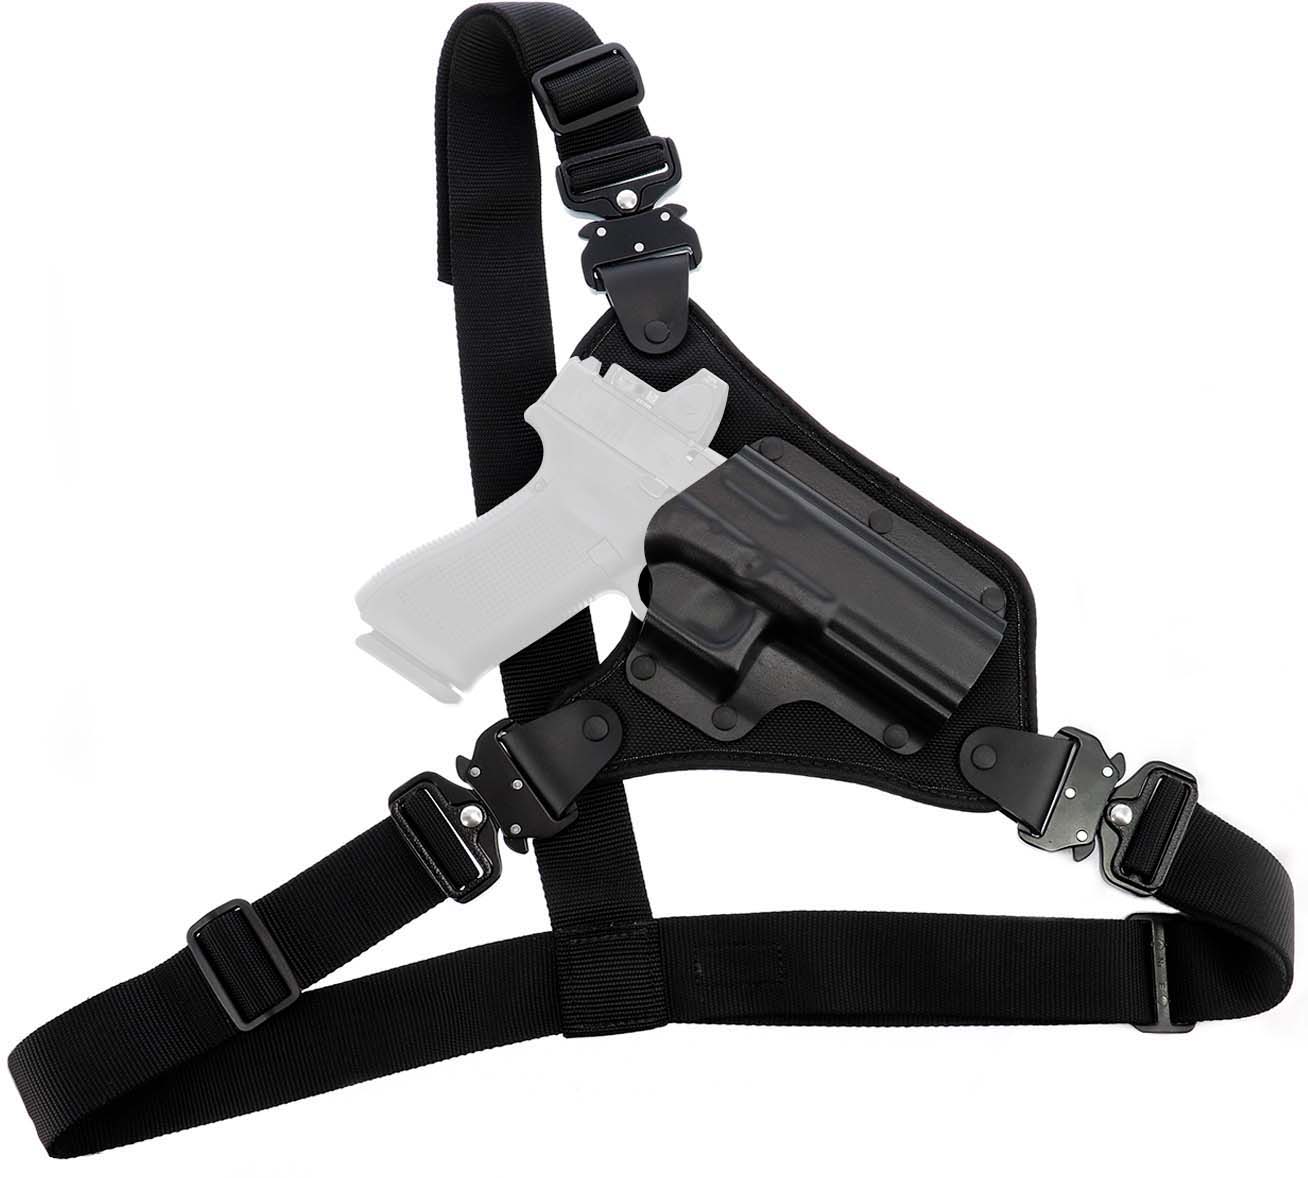 Belt vs. thigh holster for Legion P226 RX